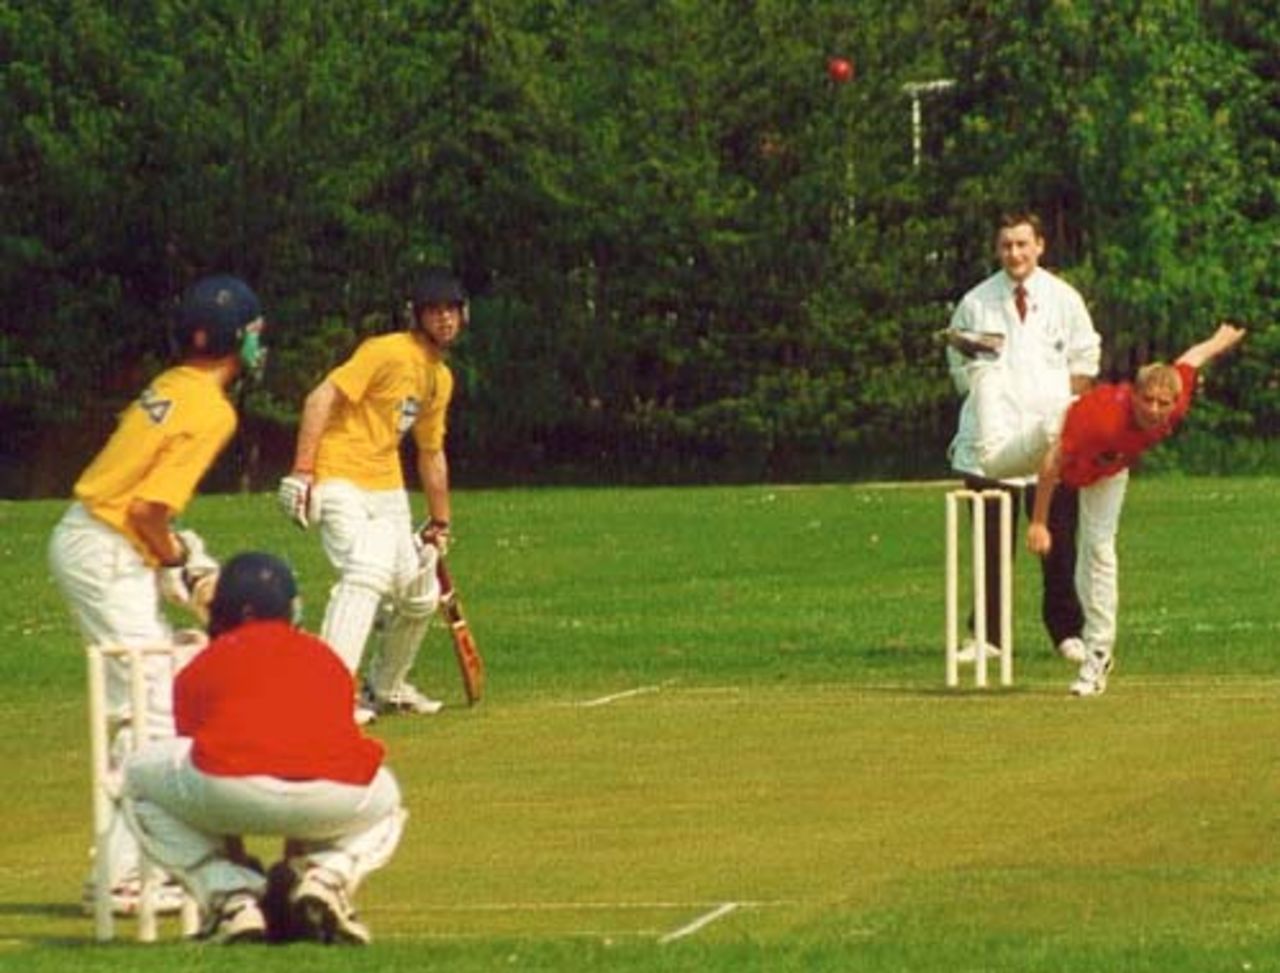 Cricket Day 2001 in Ireland